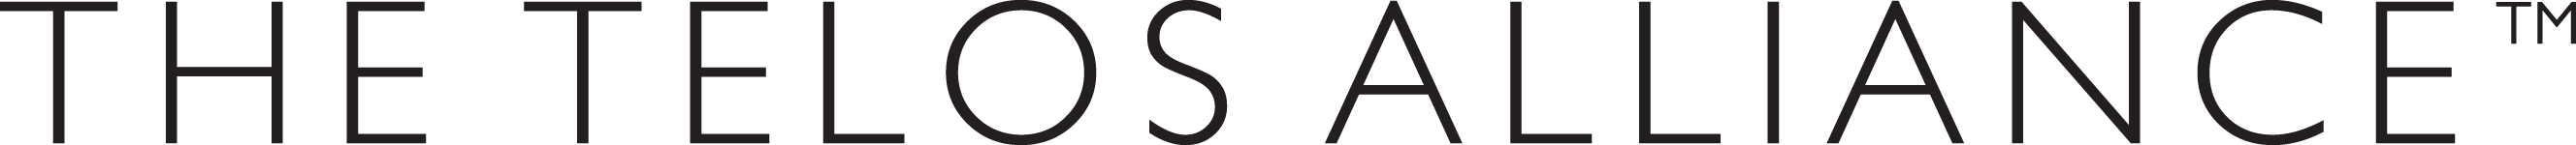 Тело логотип. Alliance logo. Telos SW. Telo logo PNG.